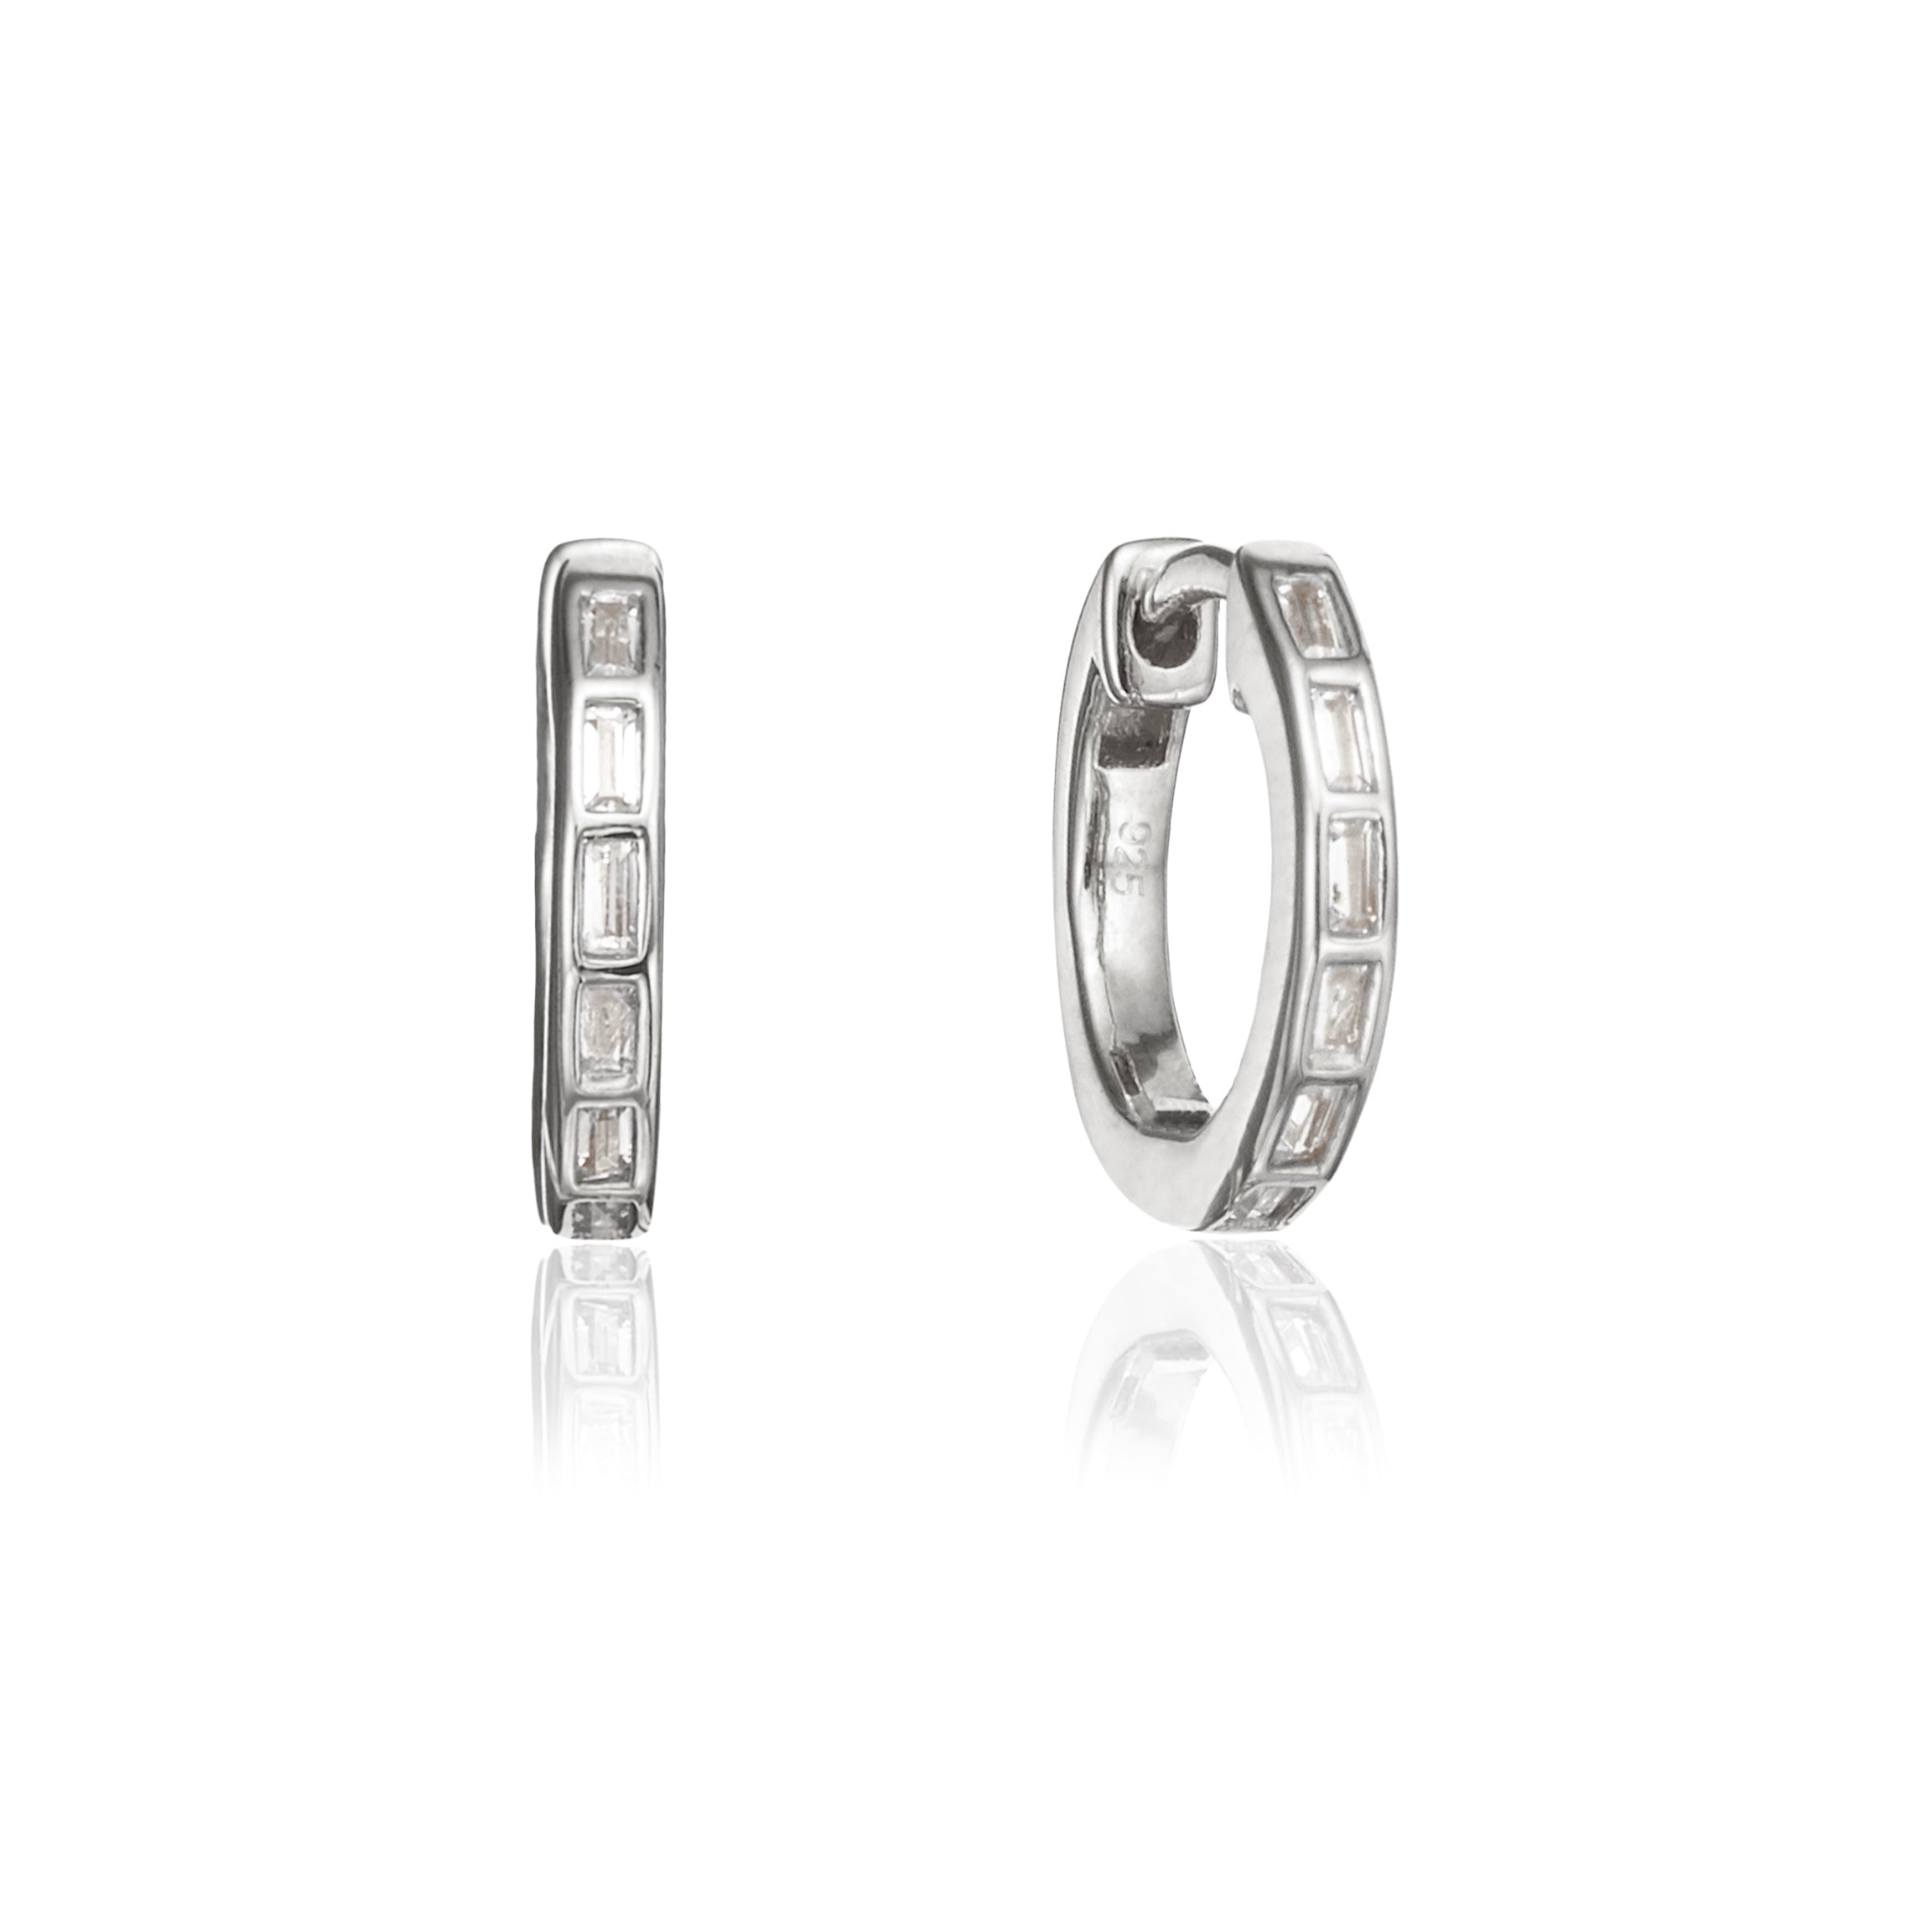 Silver diamond style baguette medium hoop earrings on a white background